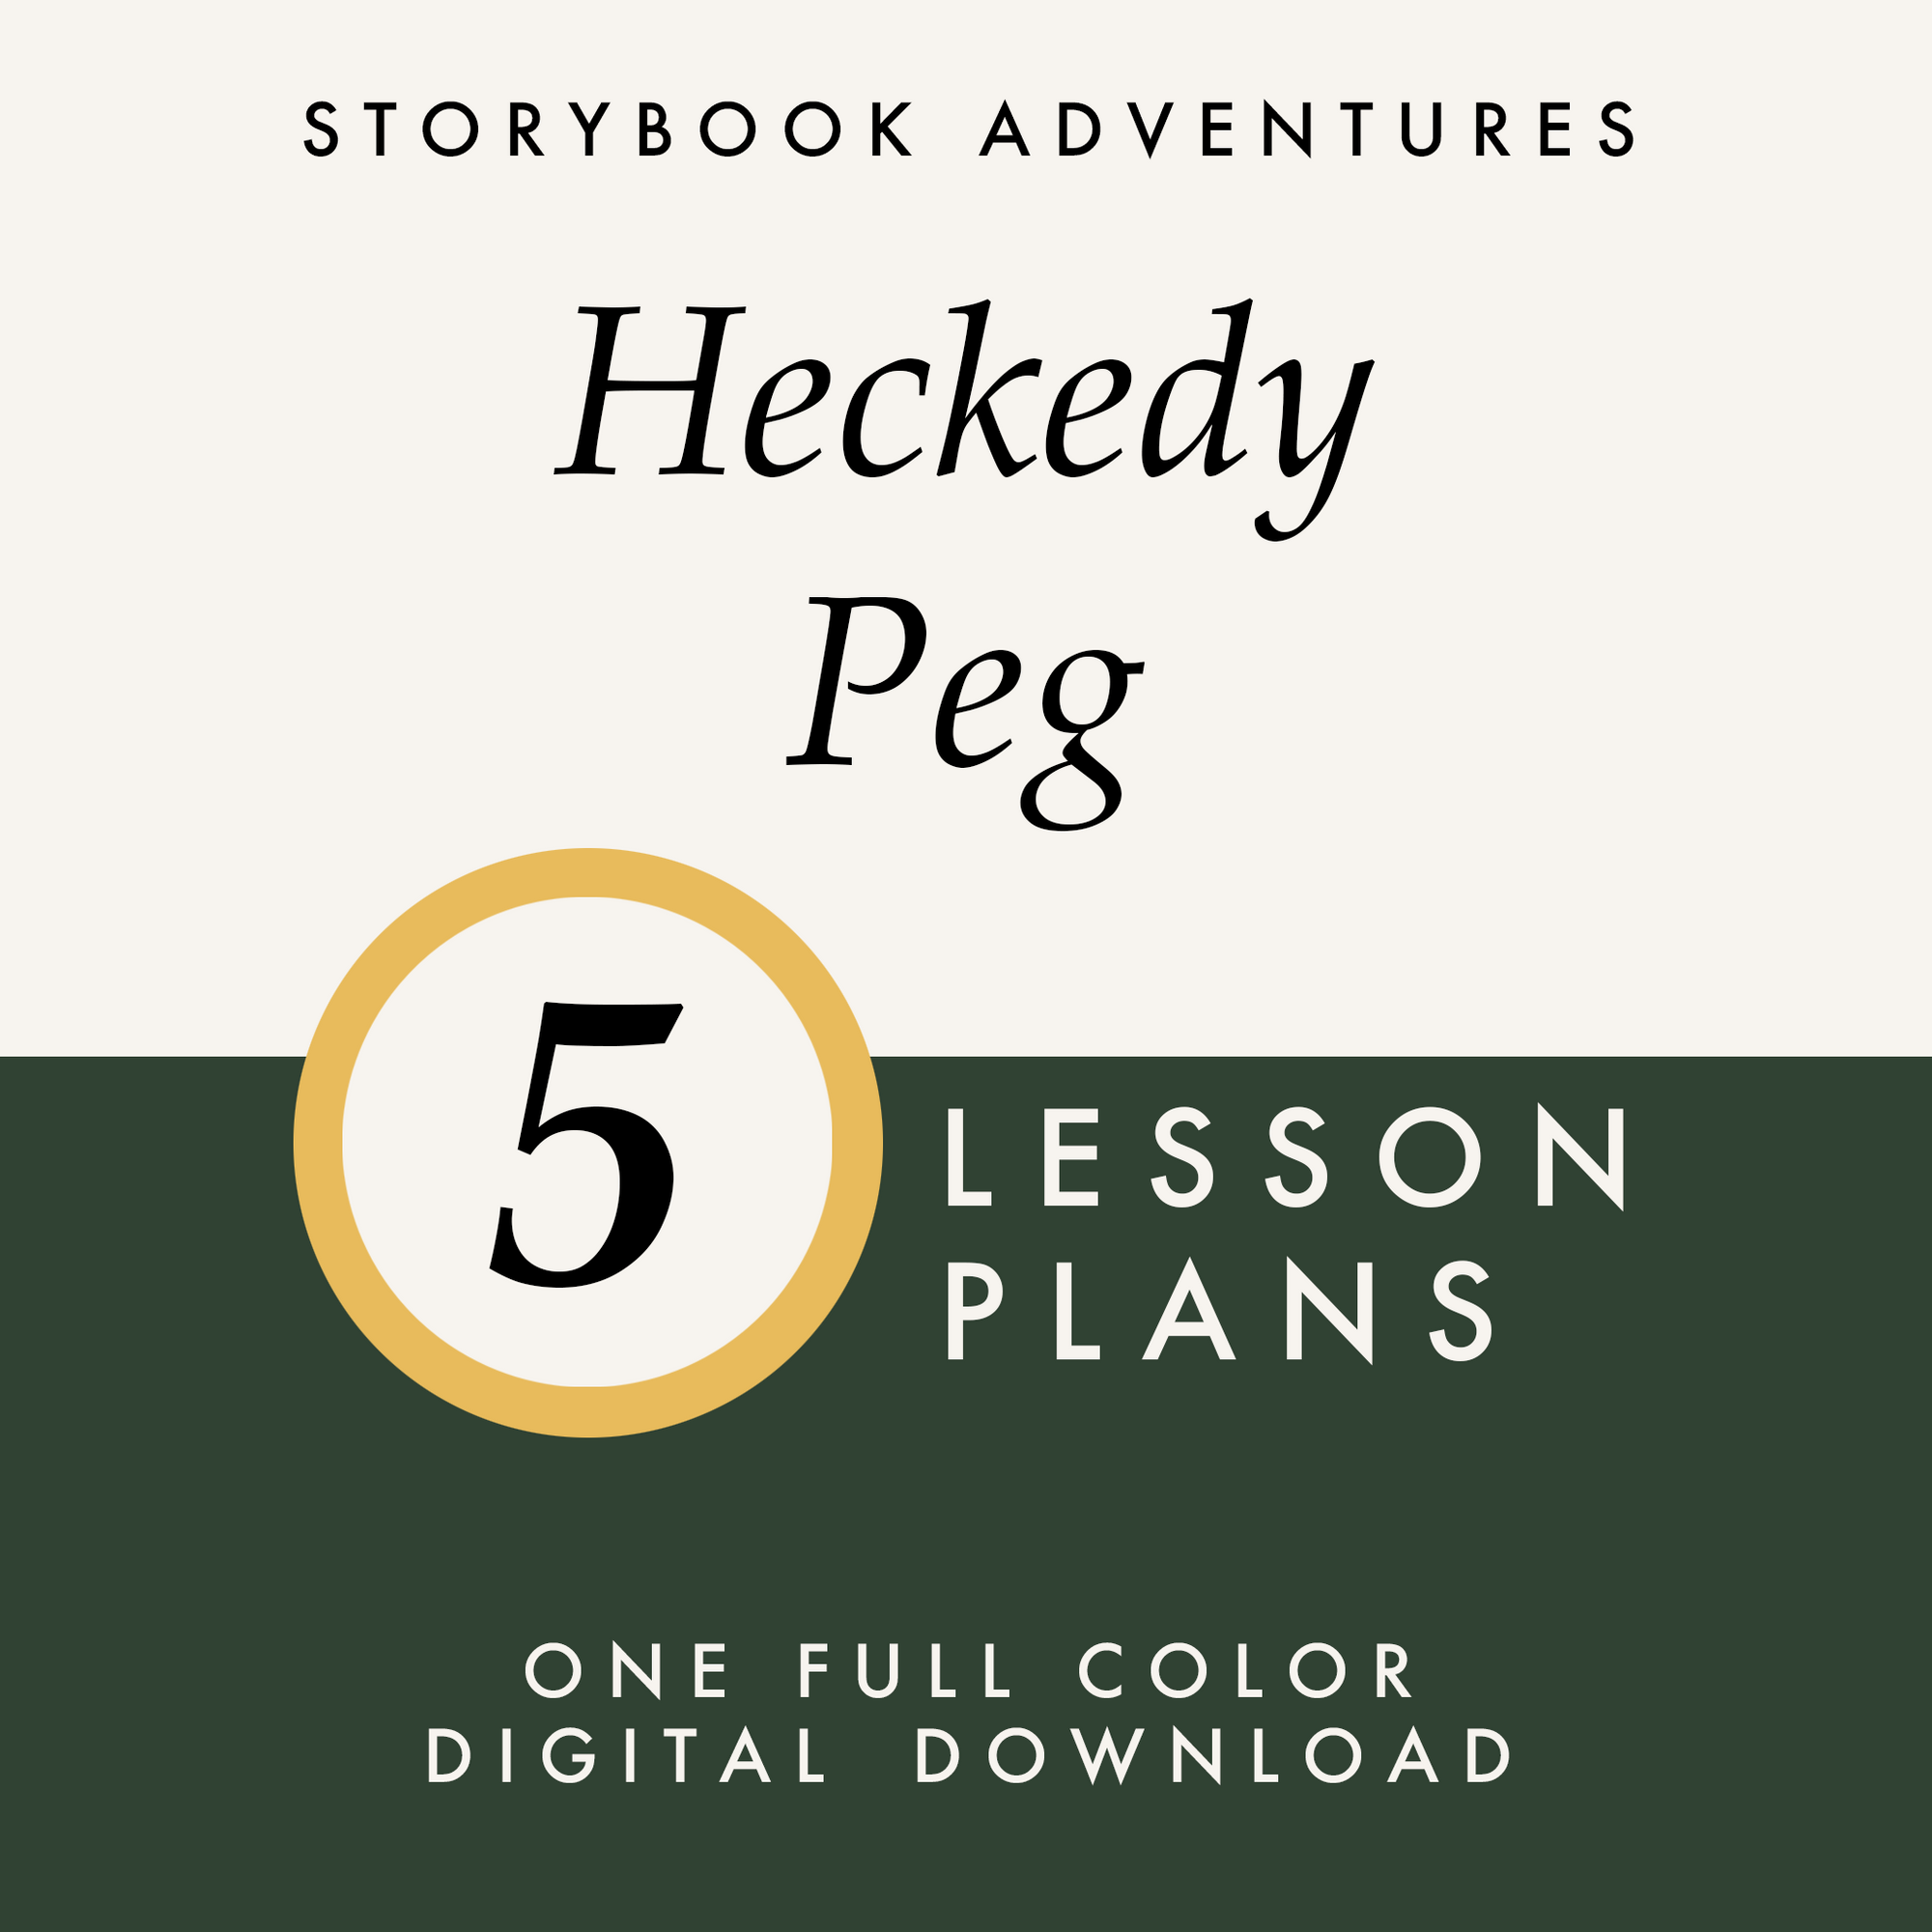 Storybook Adventures: Heckedy Peg